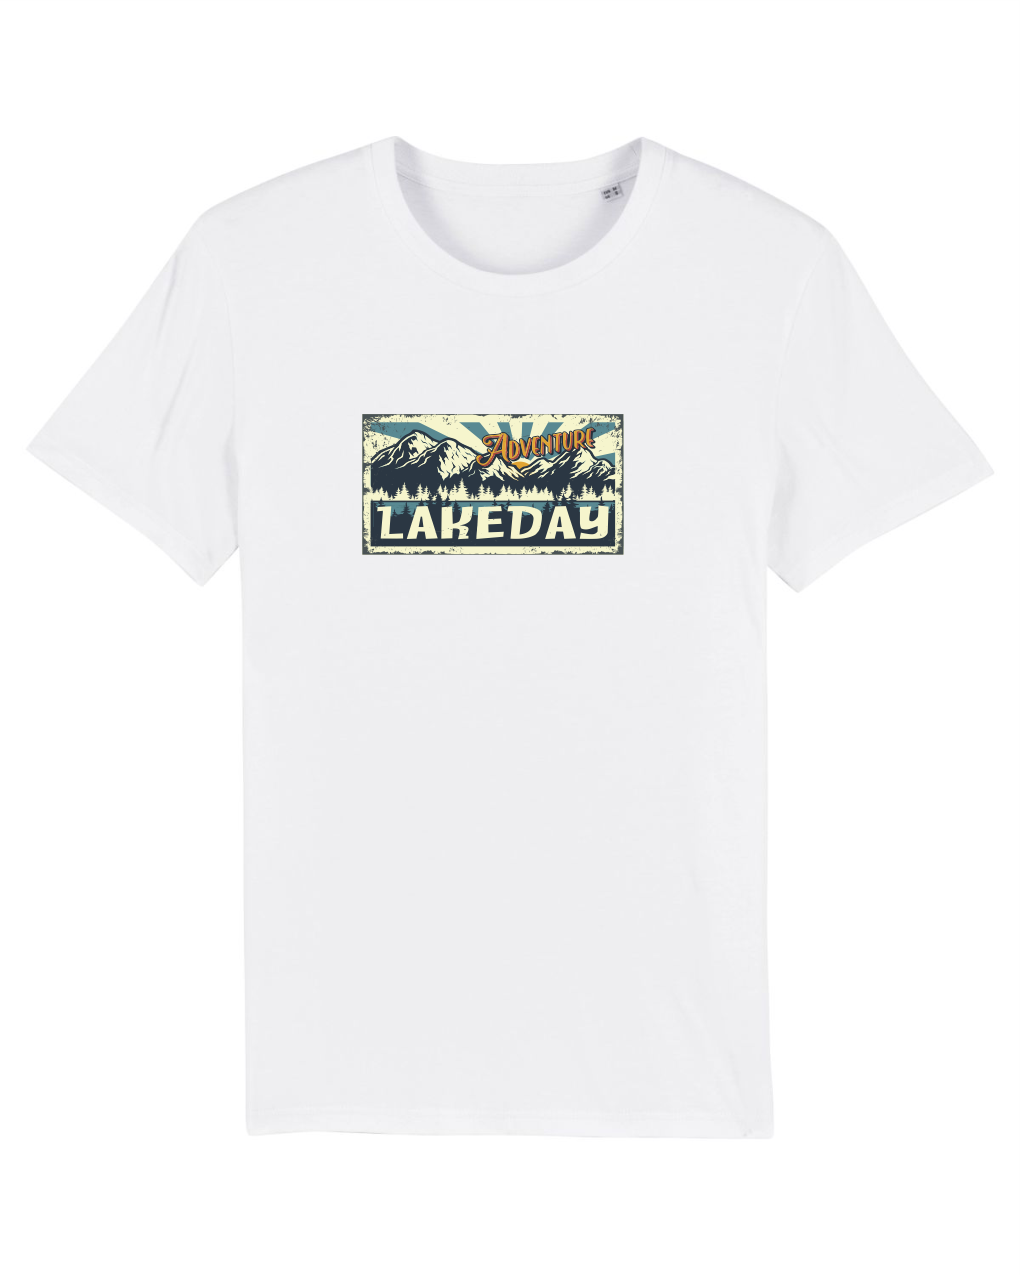 Lakeday Shirt 